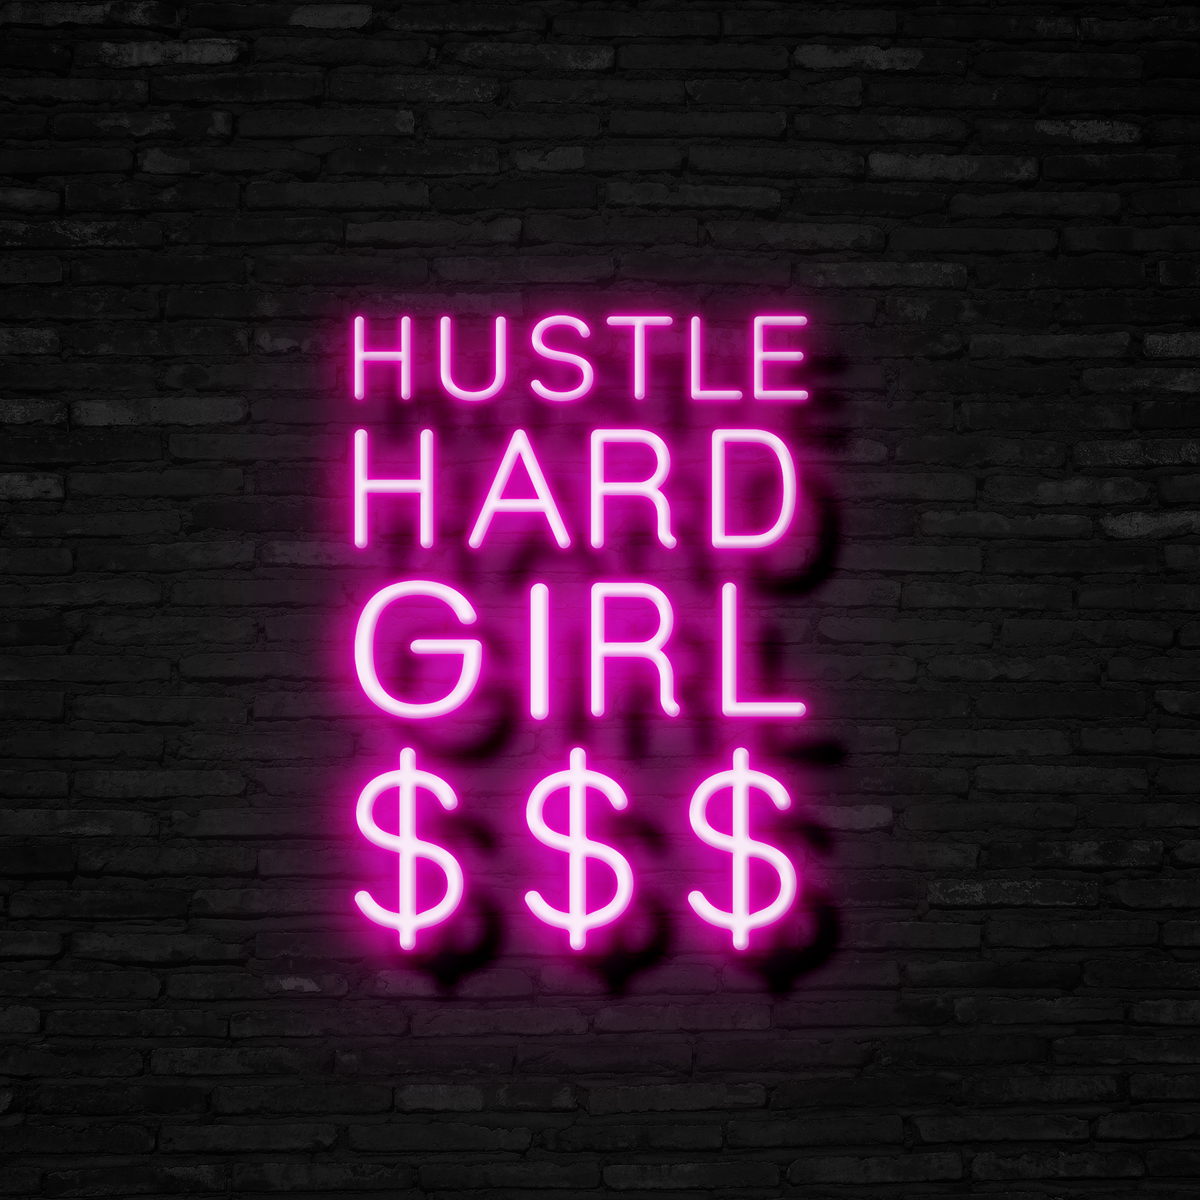 Hustle Hard Girl $$$ - Neon Sign – OHANEON